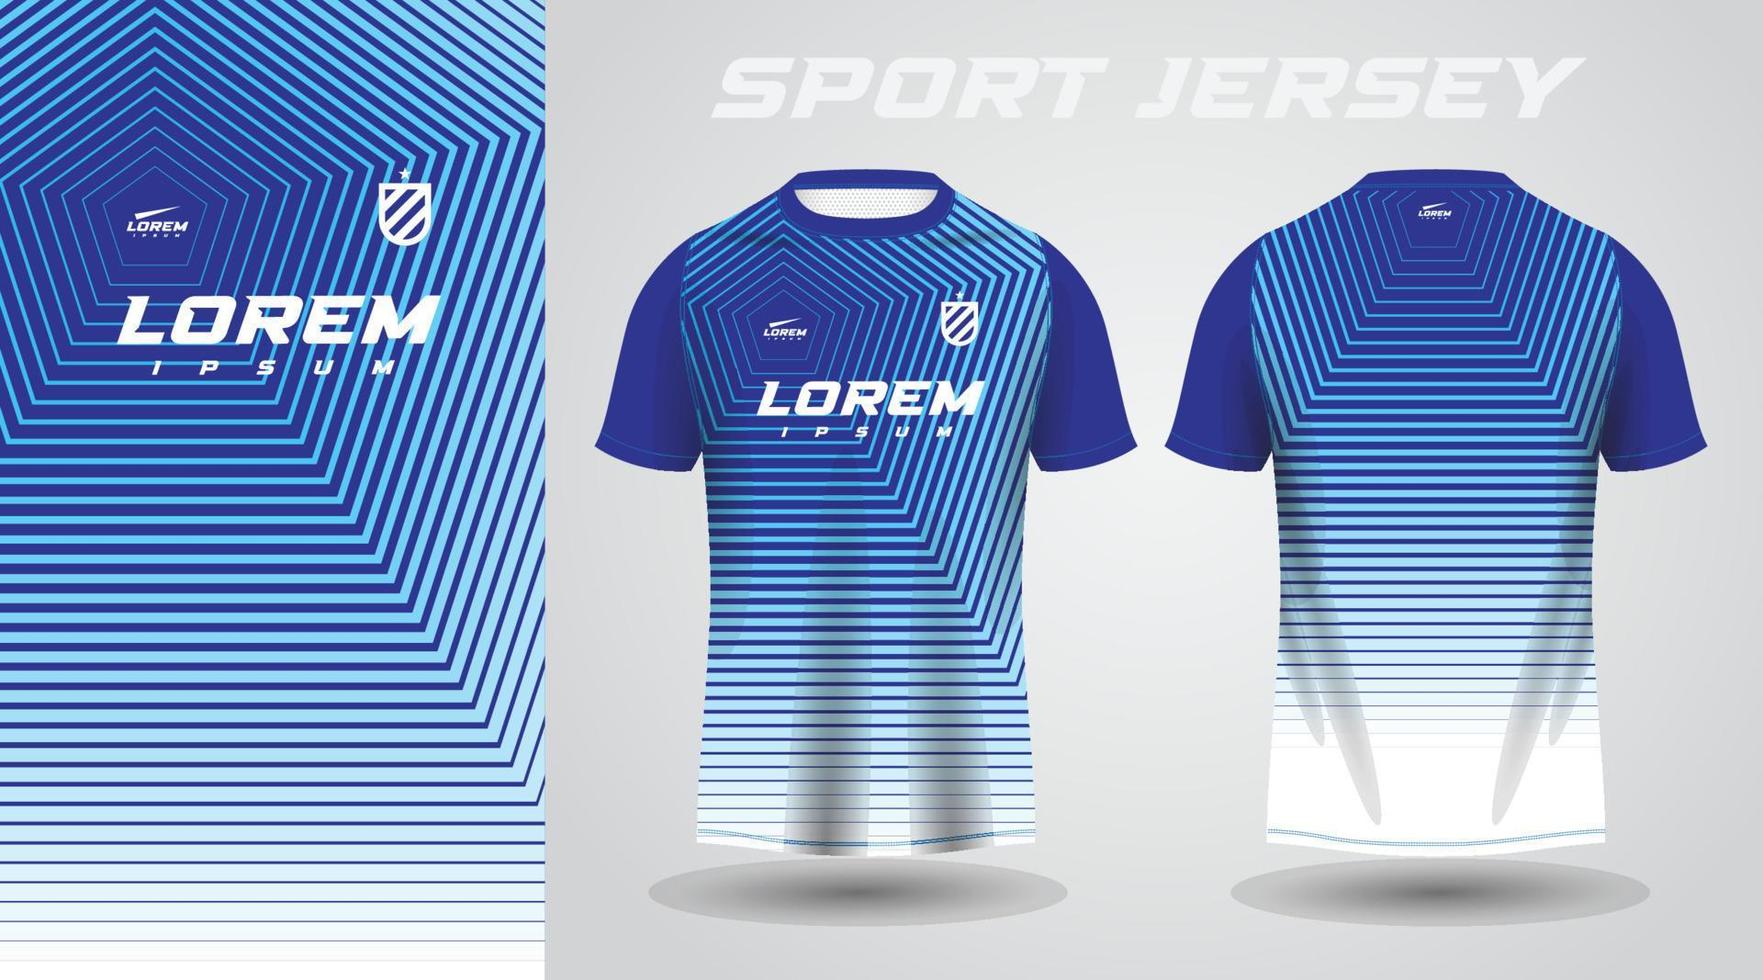 diseño de camiseta deportiva de camisa azul vector